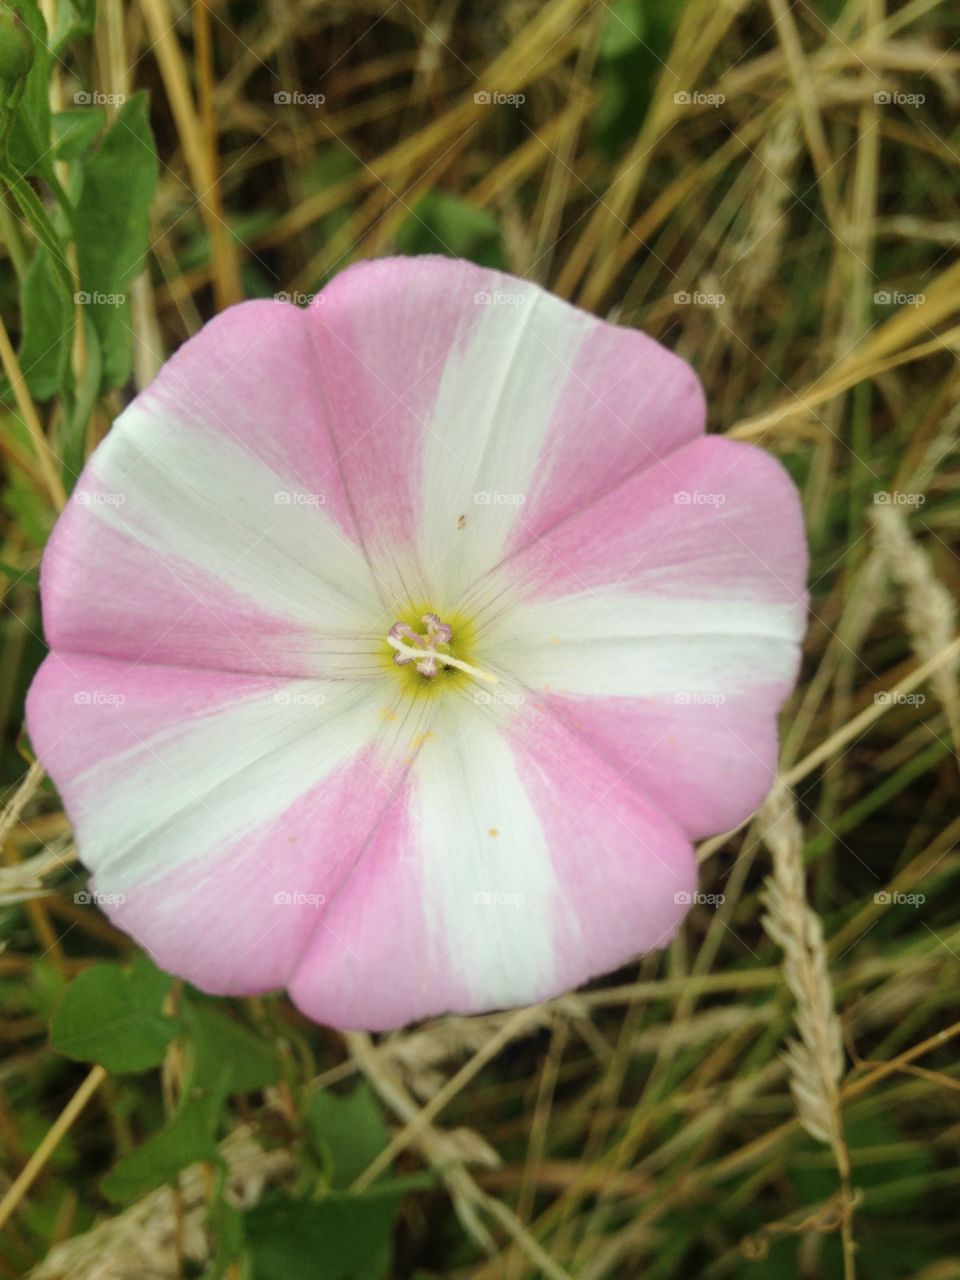 Lovely little pink wild flower found on the hills amongst hay and bracken.